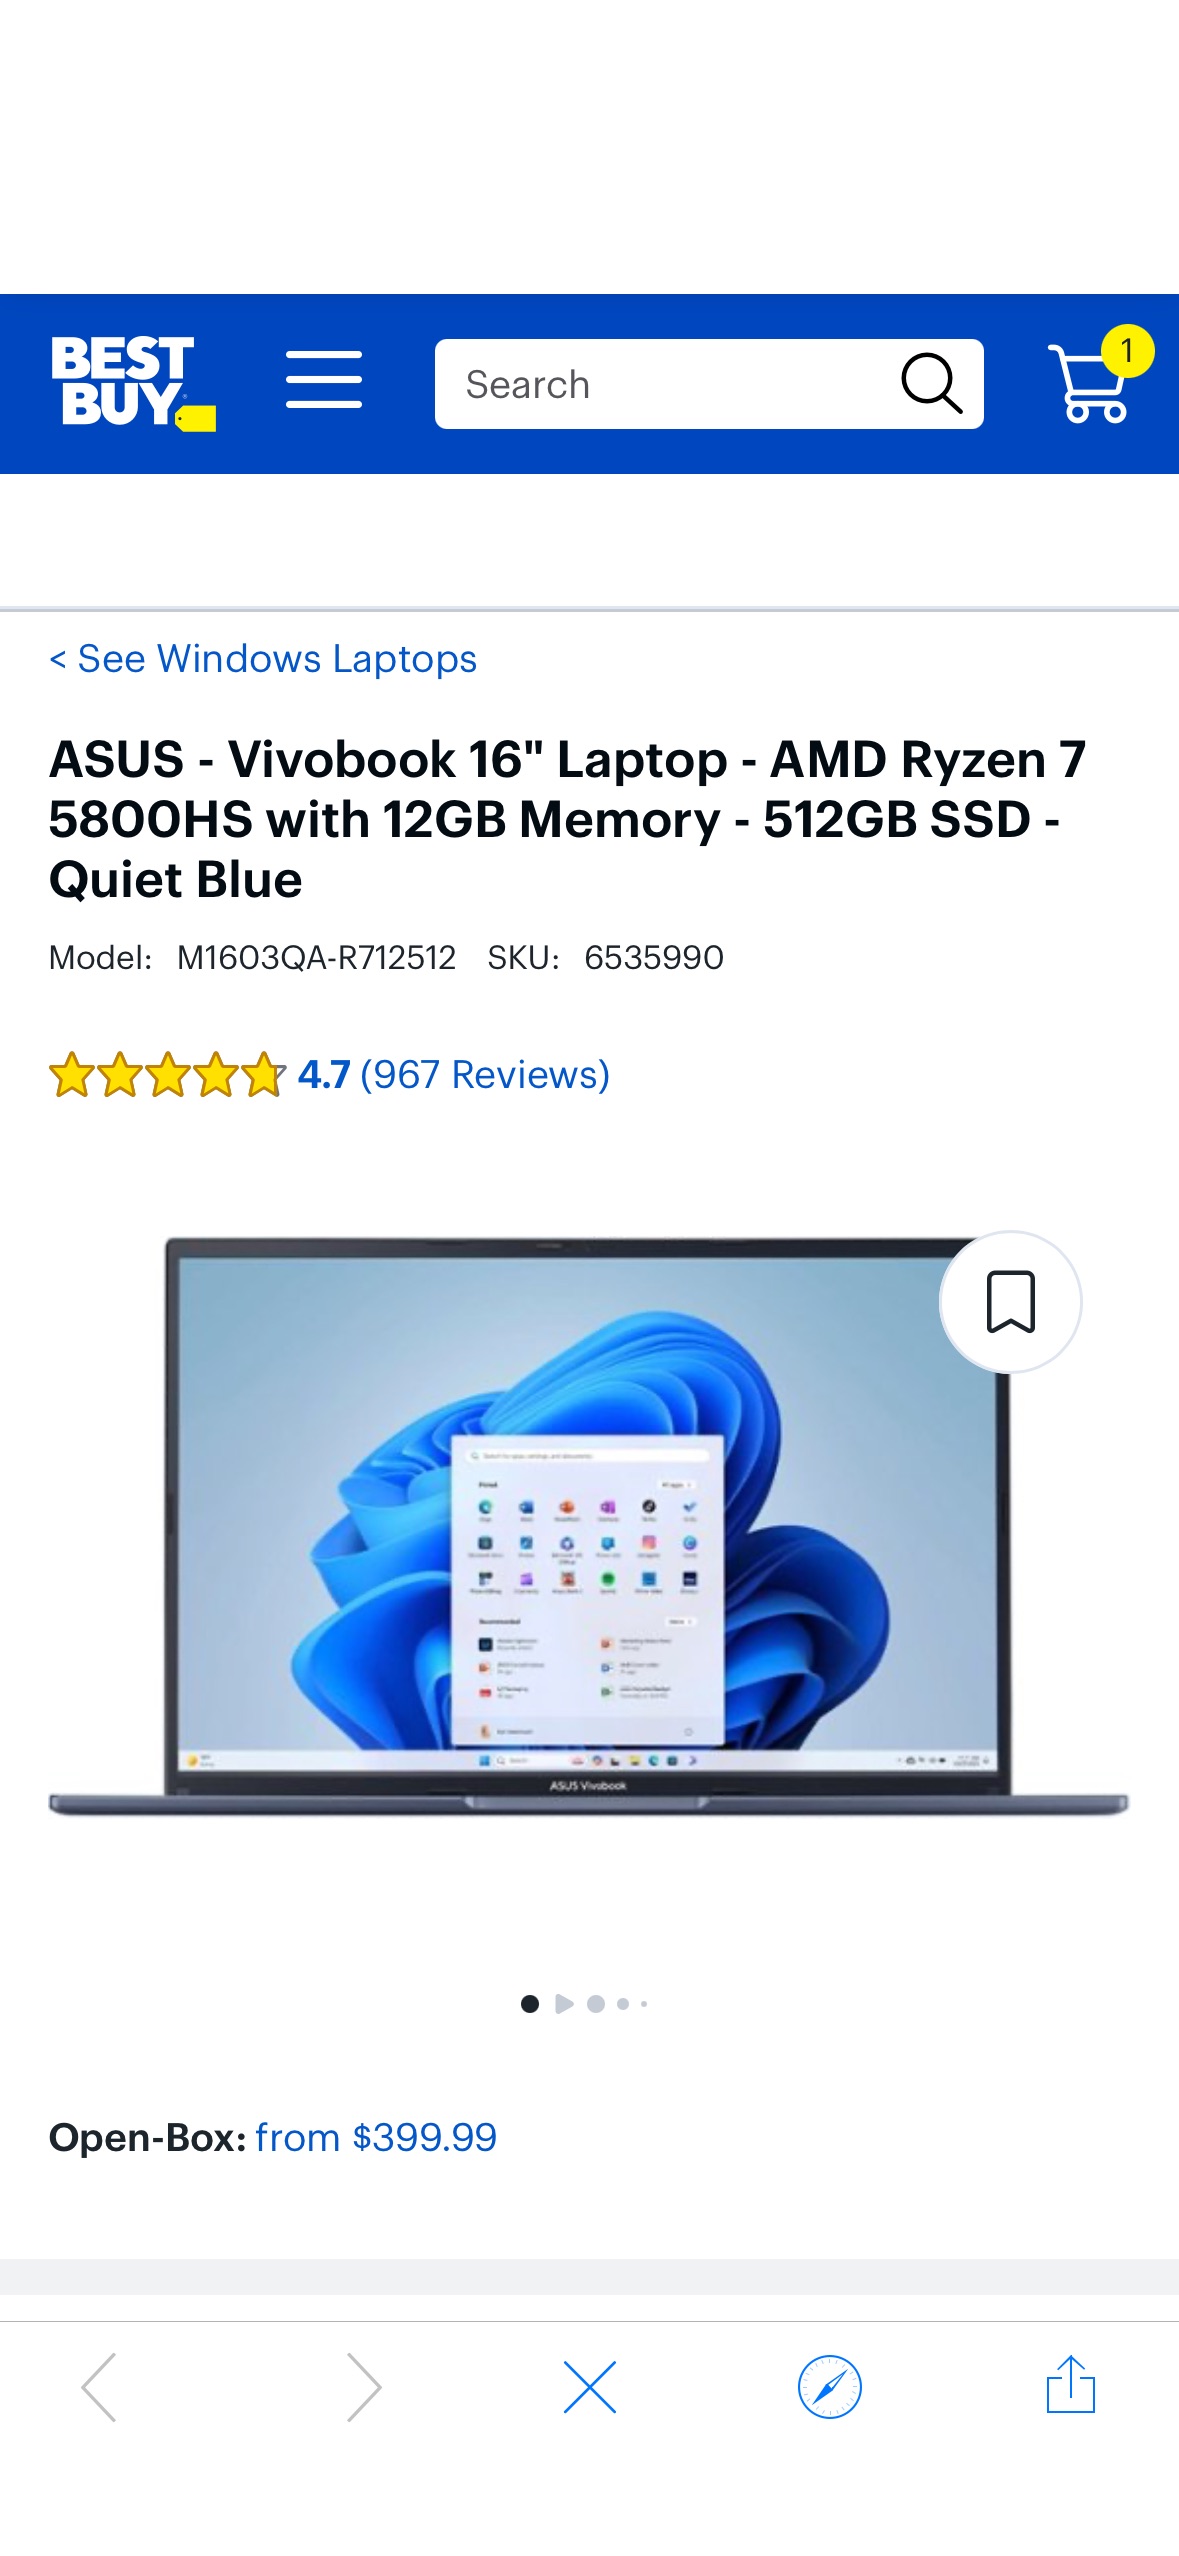 ASUS Vivobook 16" Laptop AMD Ryzen 7 5800HS with 12GB Memory 512GB SSD Quiet Blue M1603QA-R712512 - Best Buy